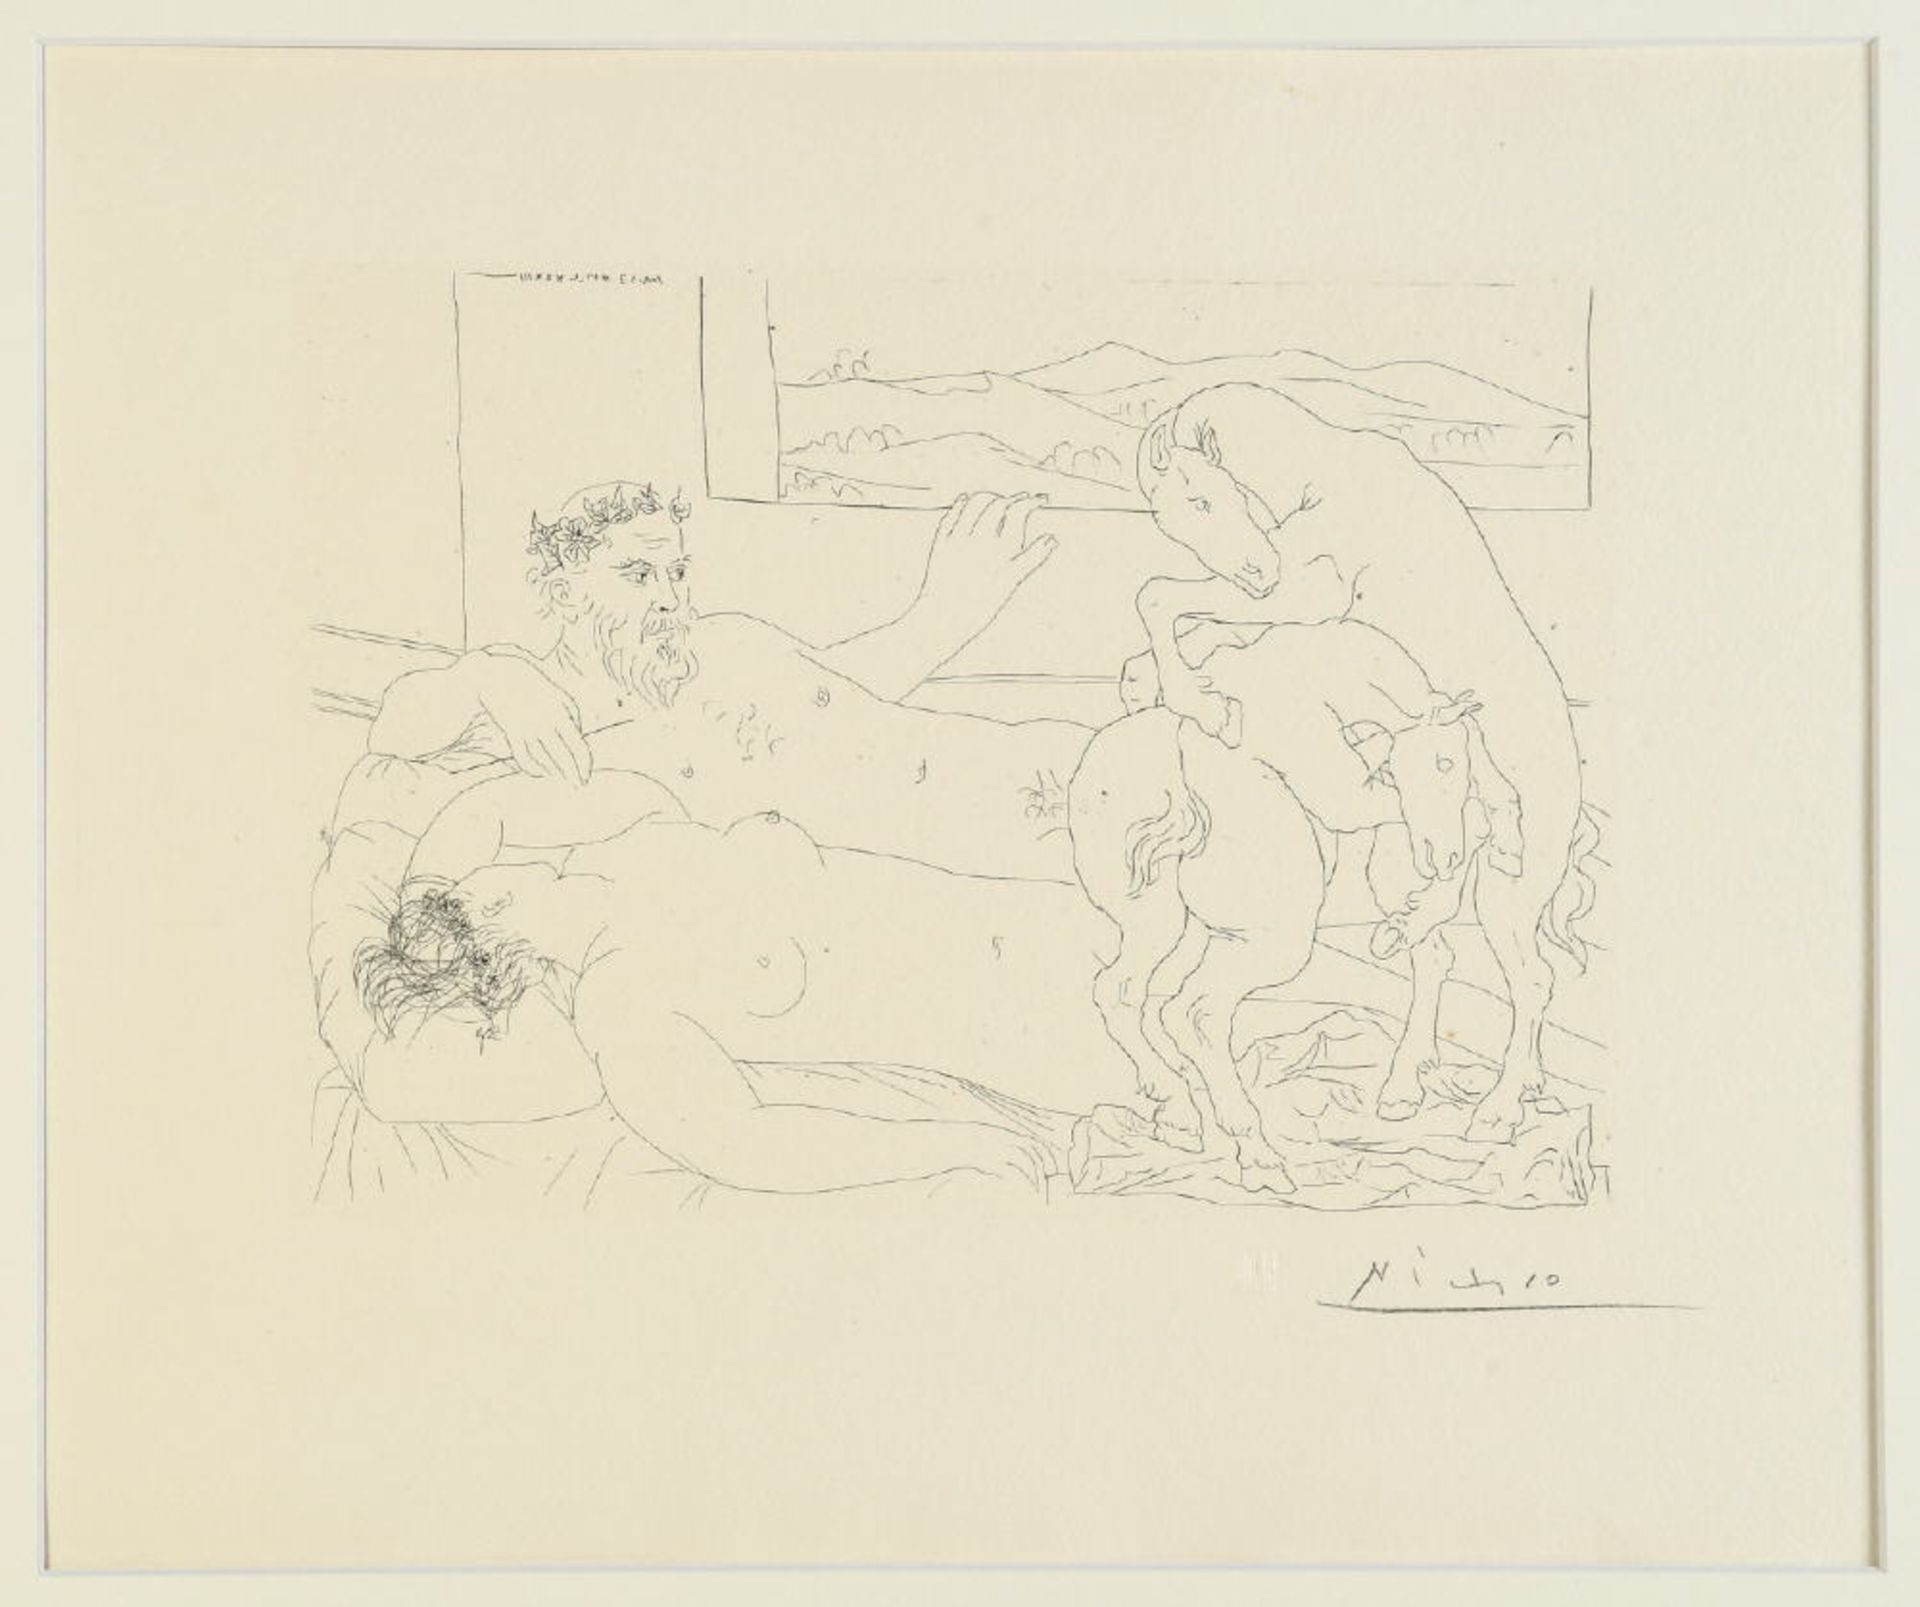 Picasso, Pablo, 1881 Malaga - 1973 Mougins